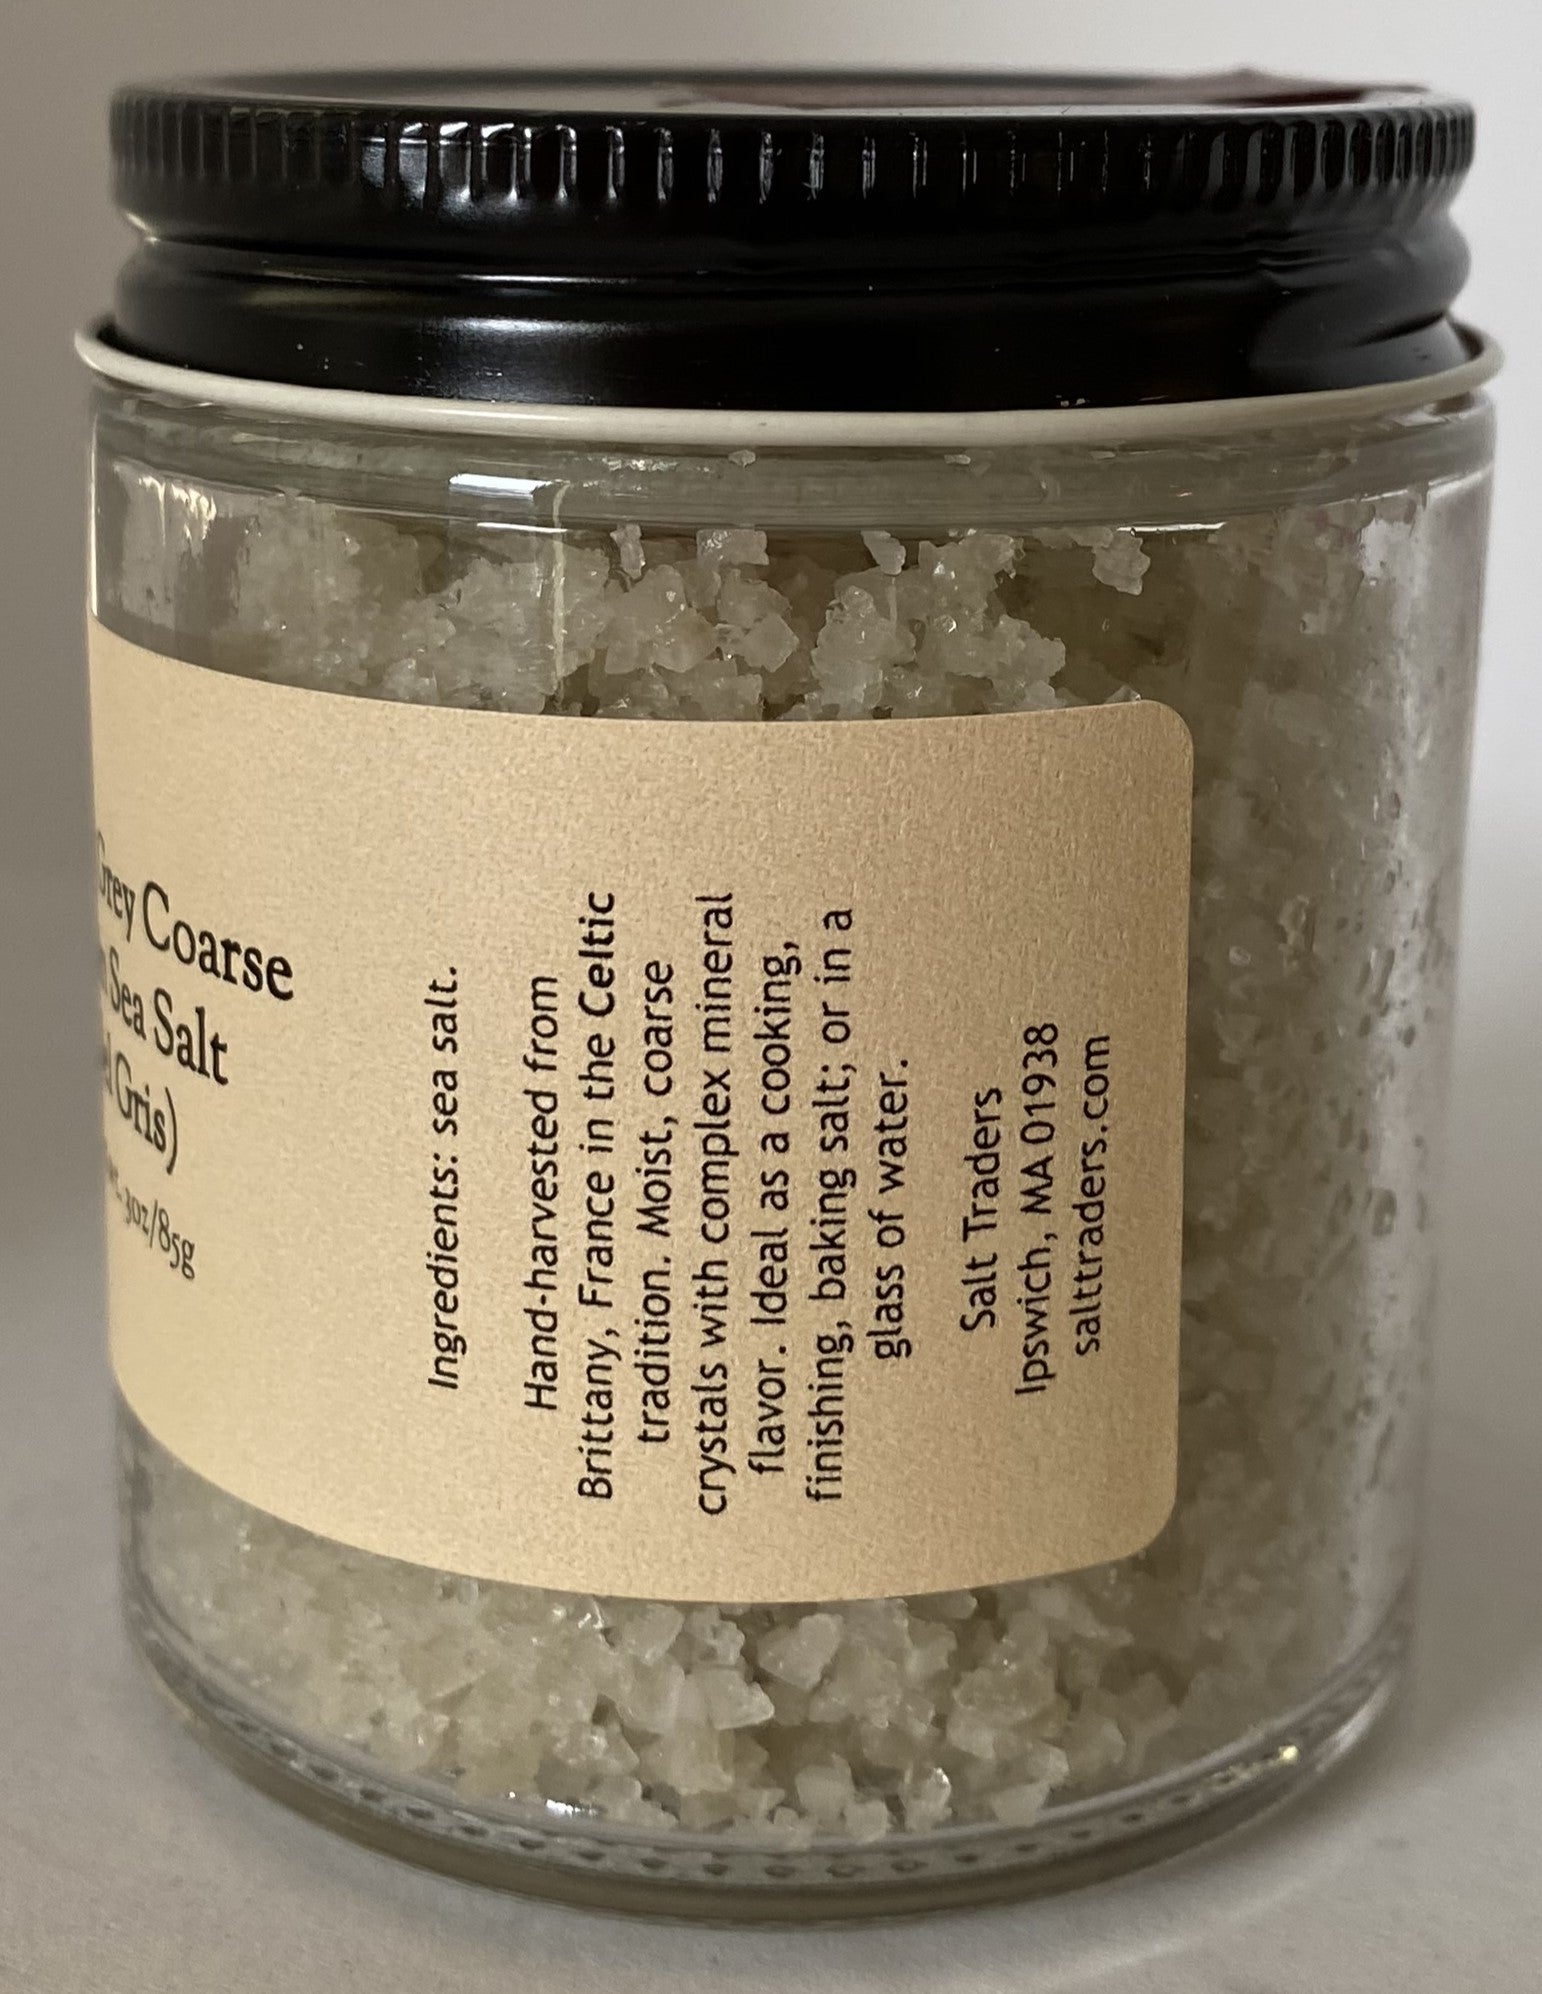 French Grey Sea Salt (Sel Gris) Fine or Coarse Grain Celtic – Salt Traders